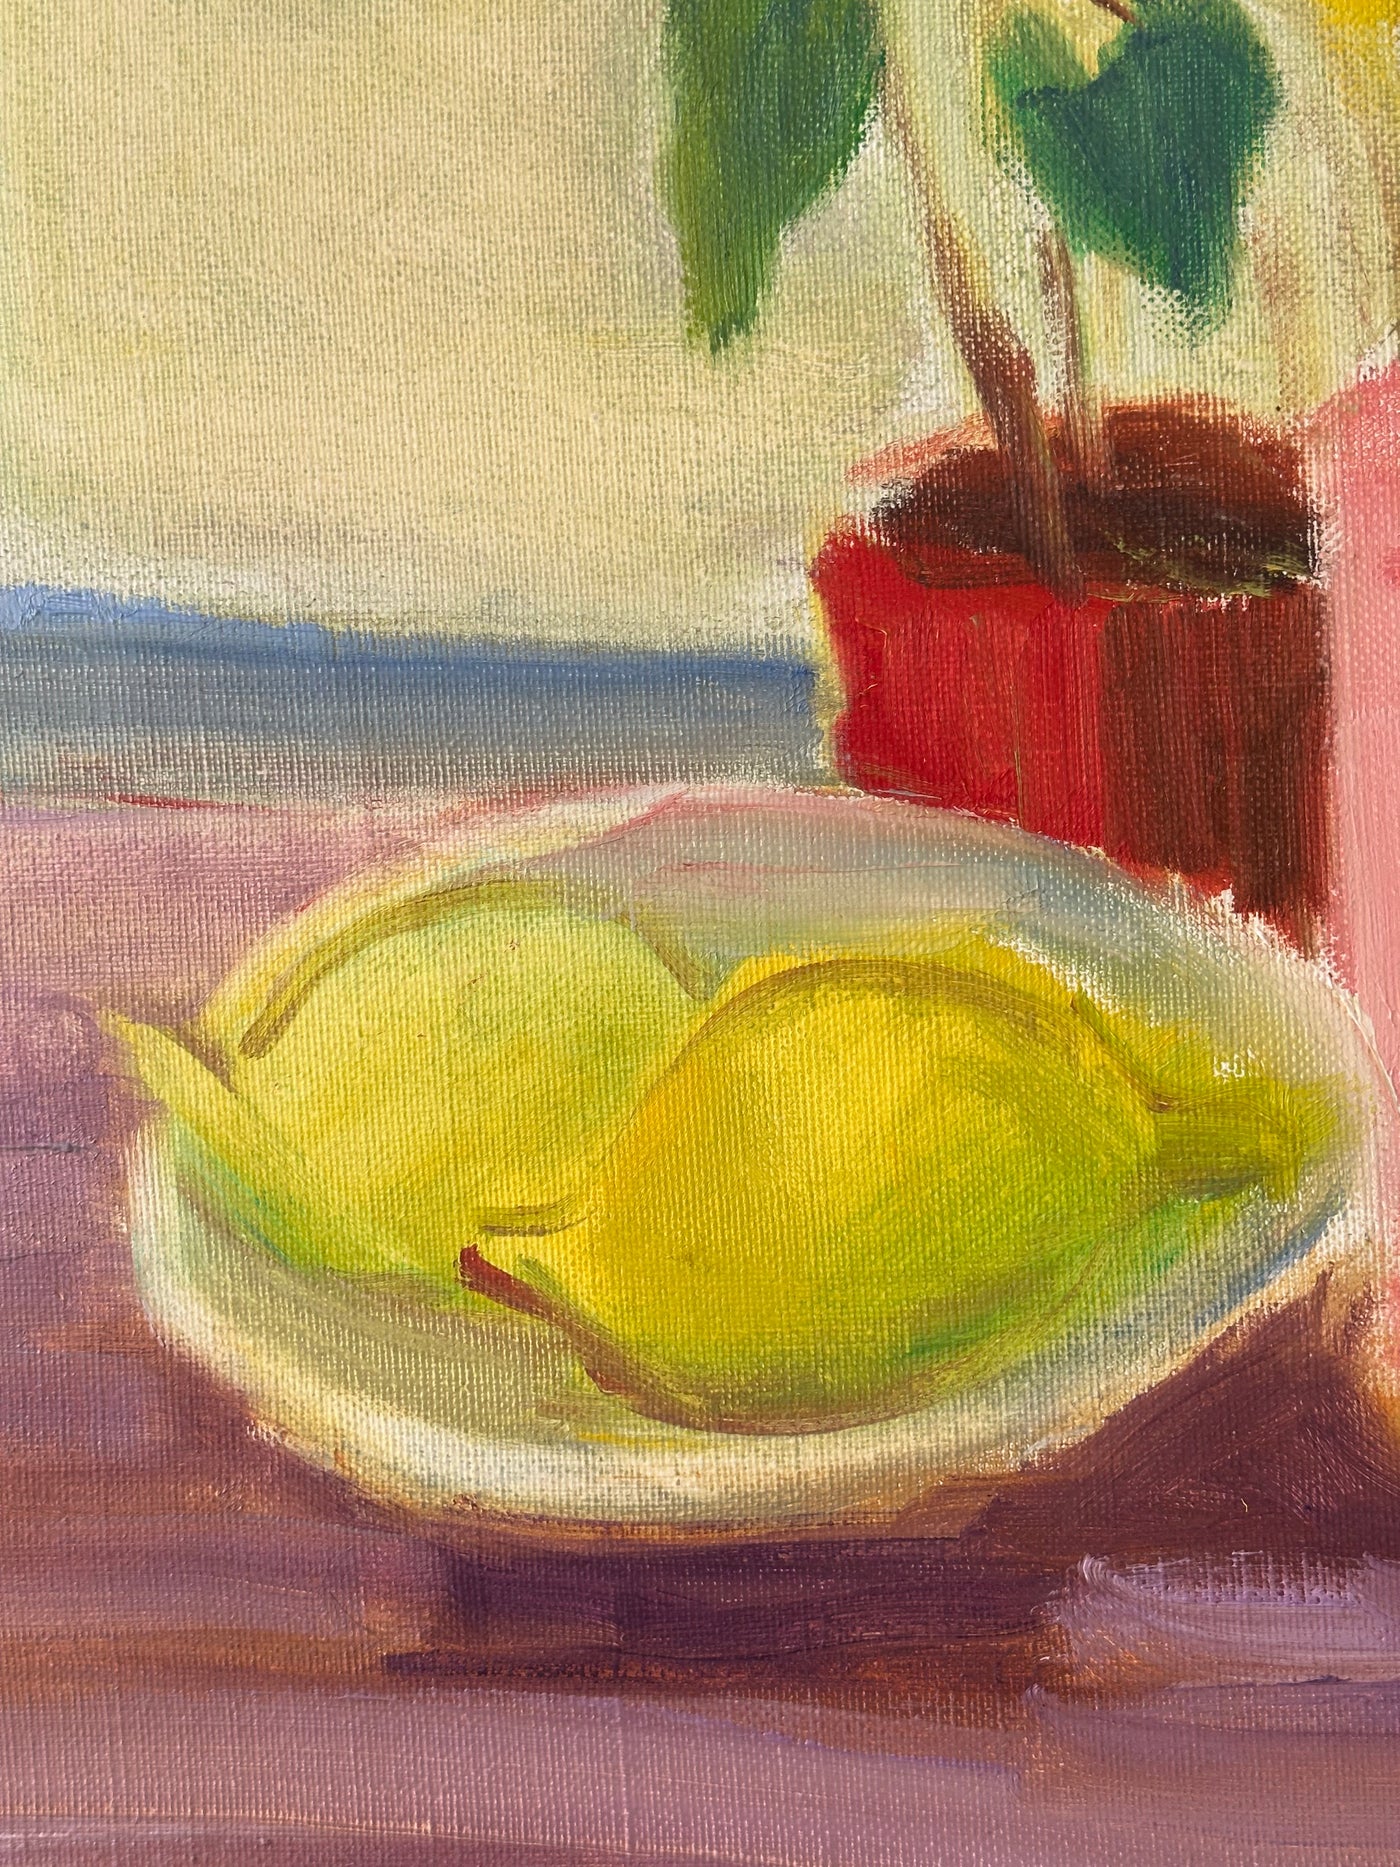 Daffodils and Pears